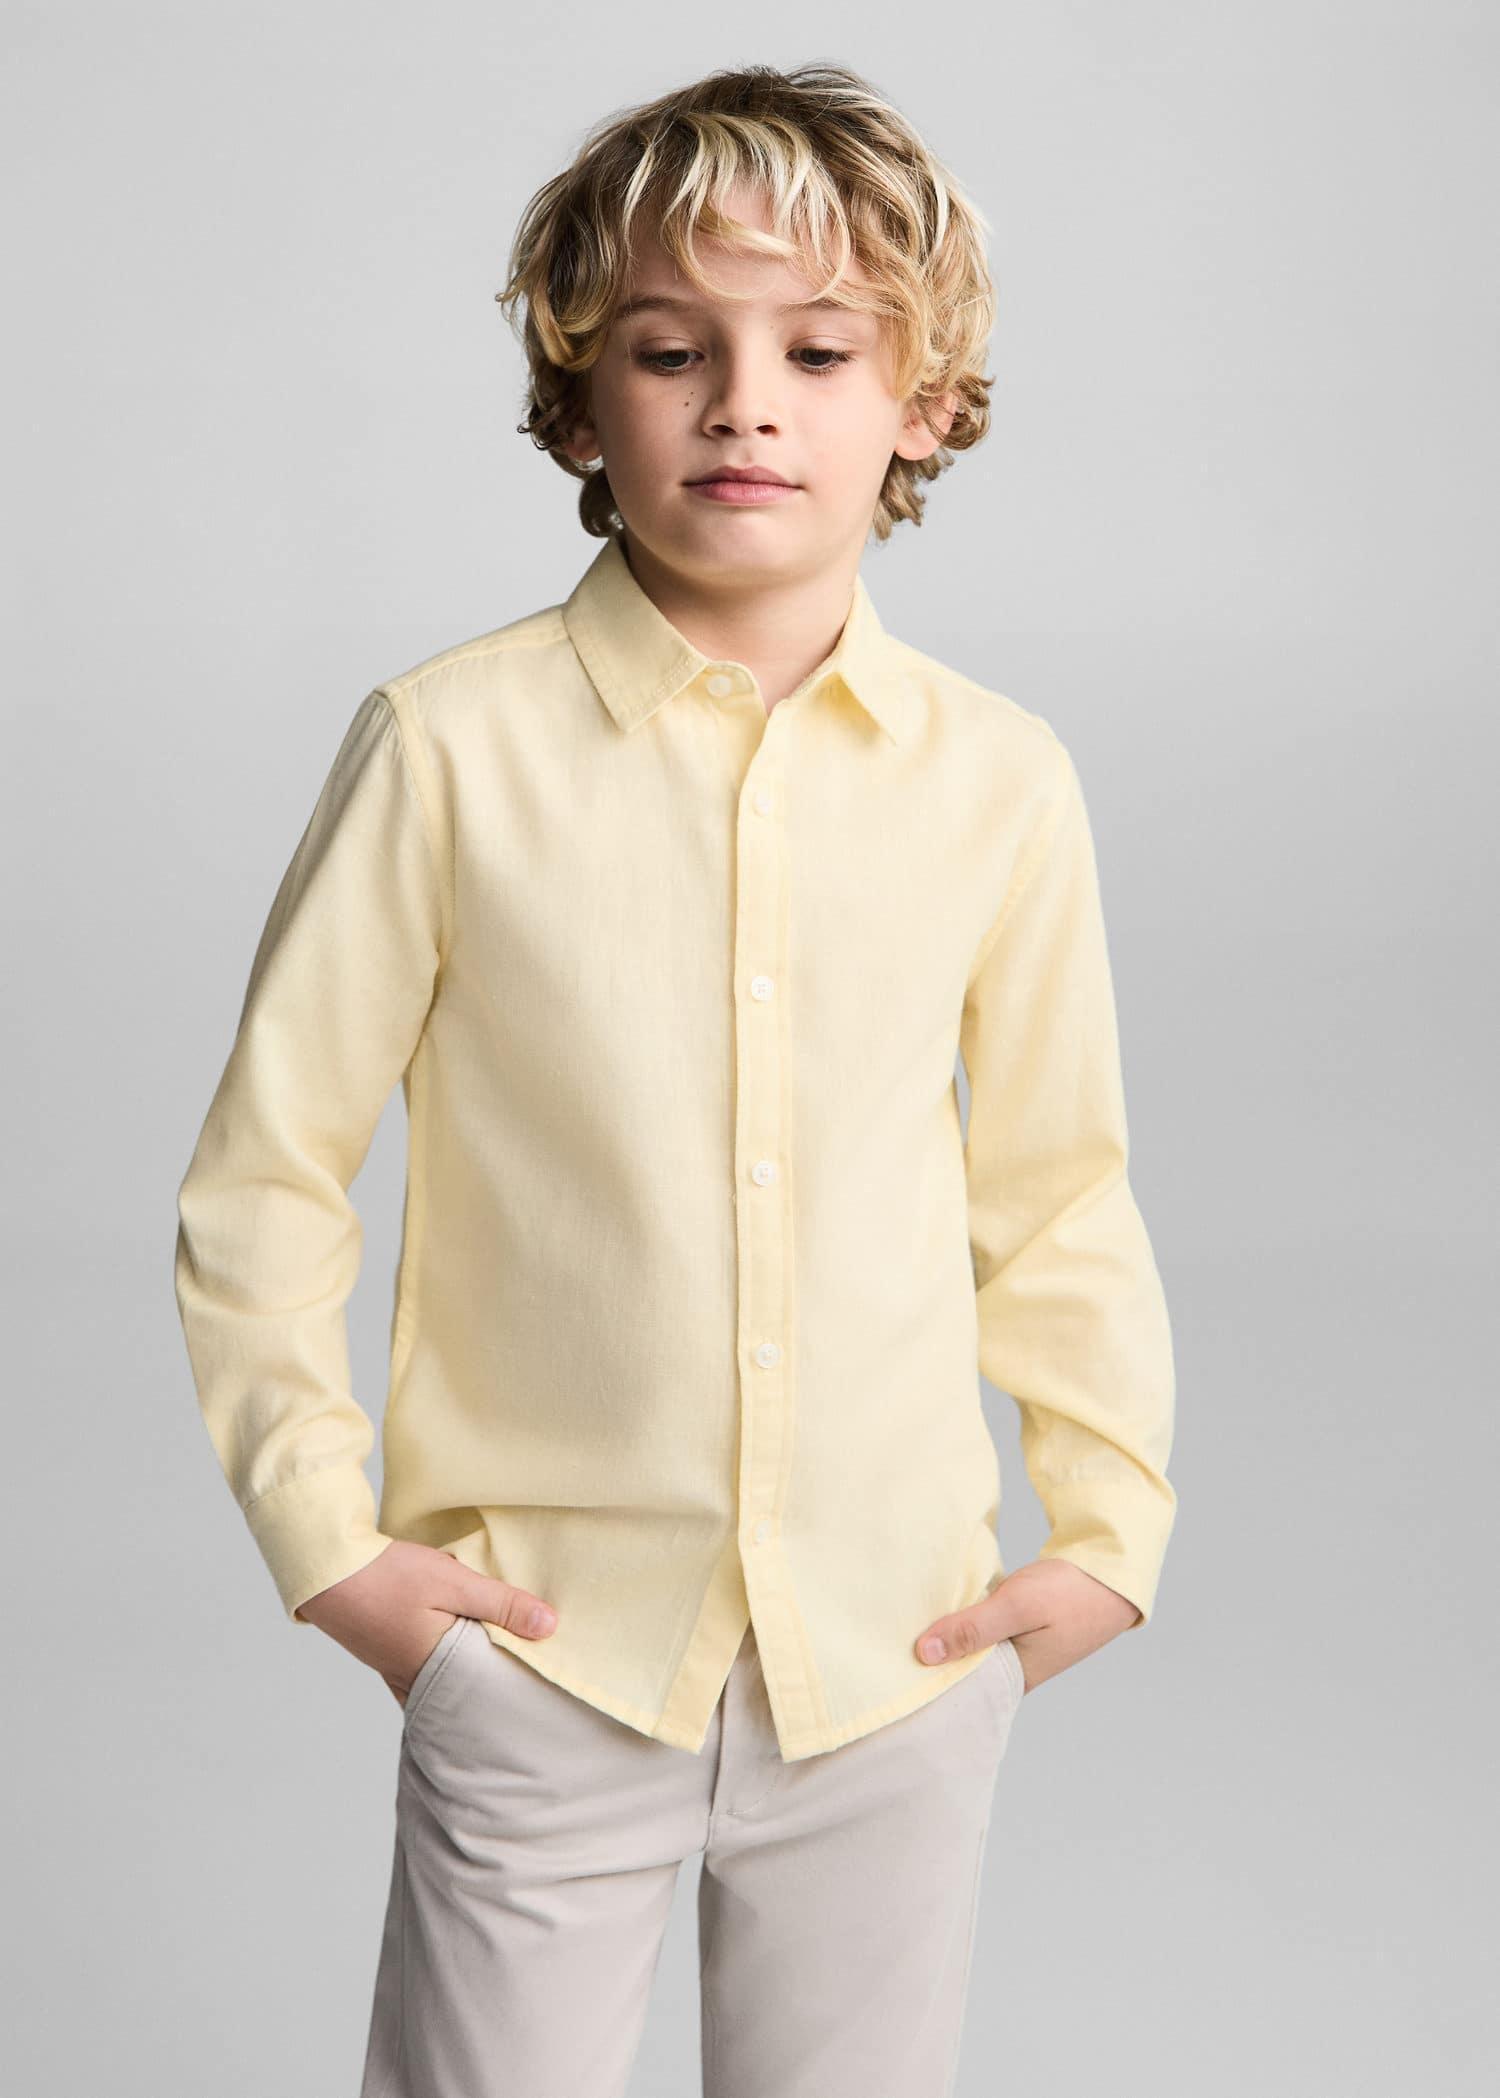 Mango - Yellow Cotton Shirt, Kids Boys